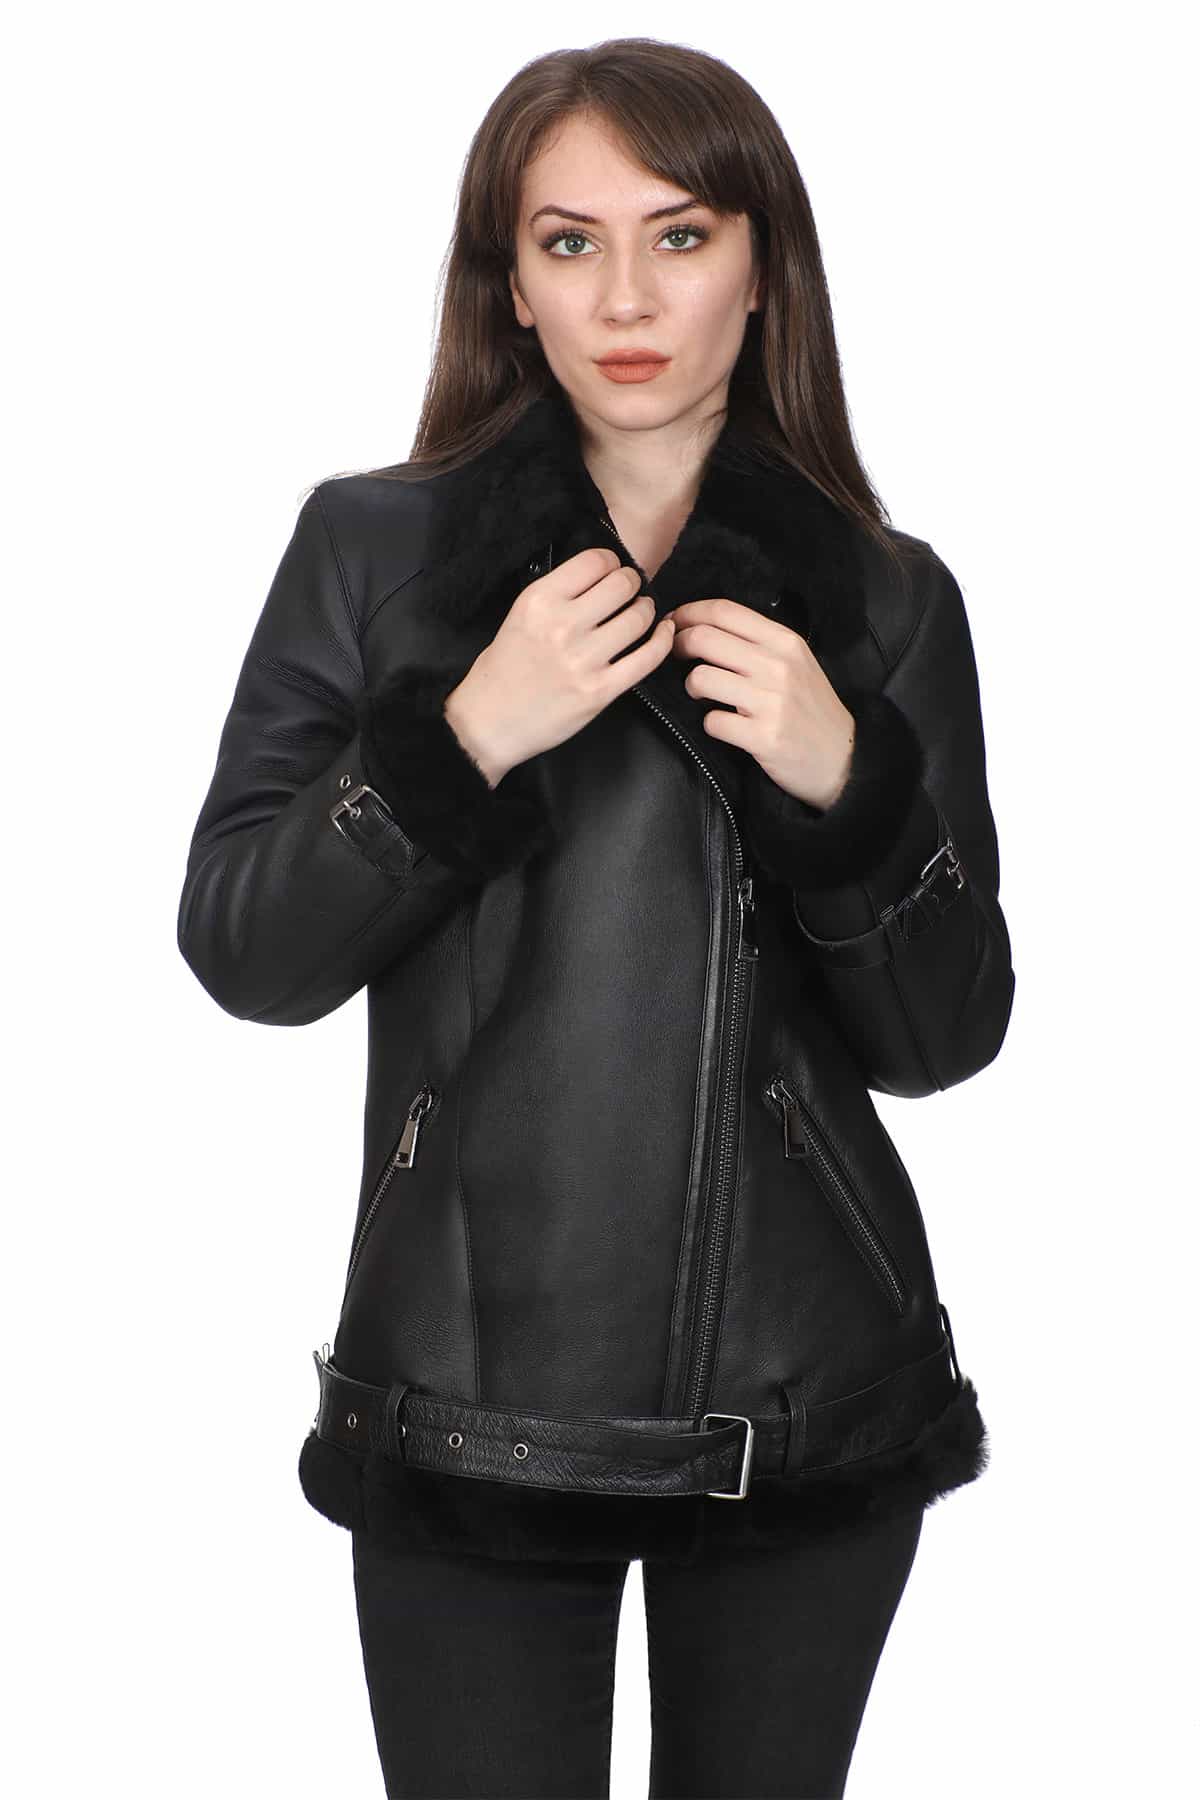 Marry Women's 100 % Real Black Leather Faux-Fur Jacket